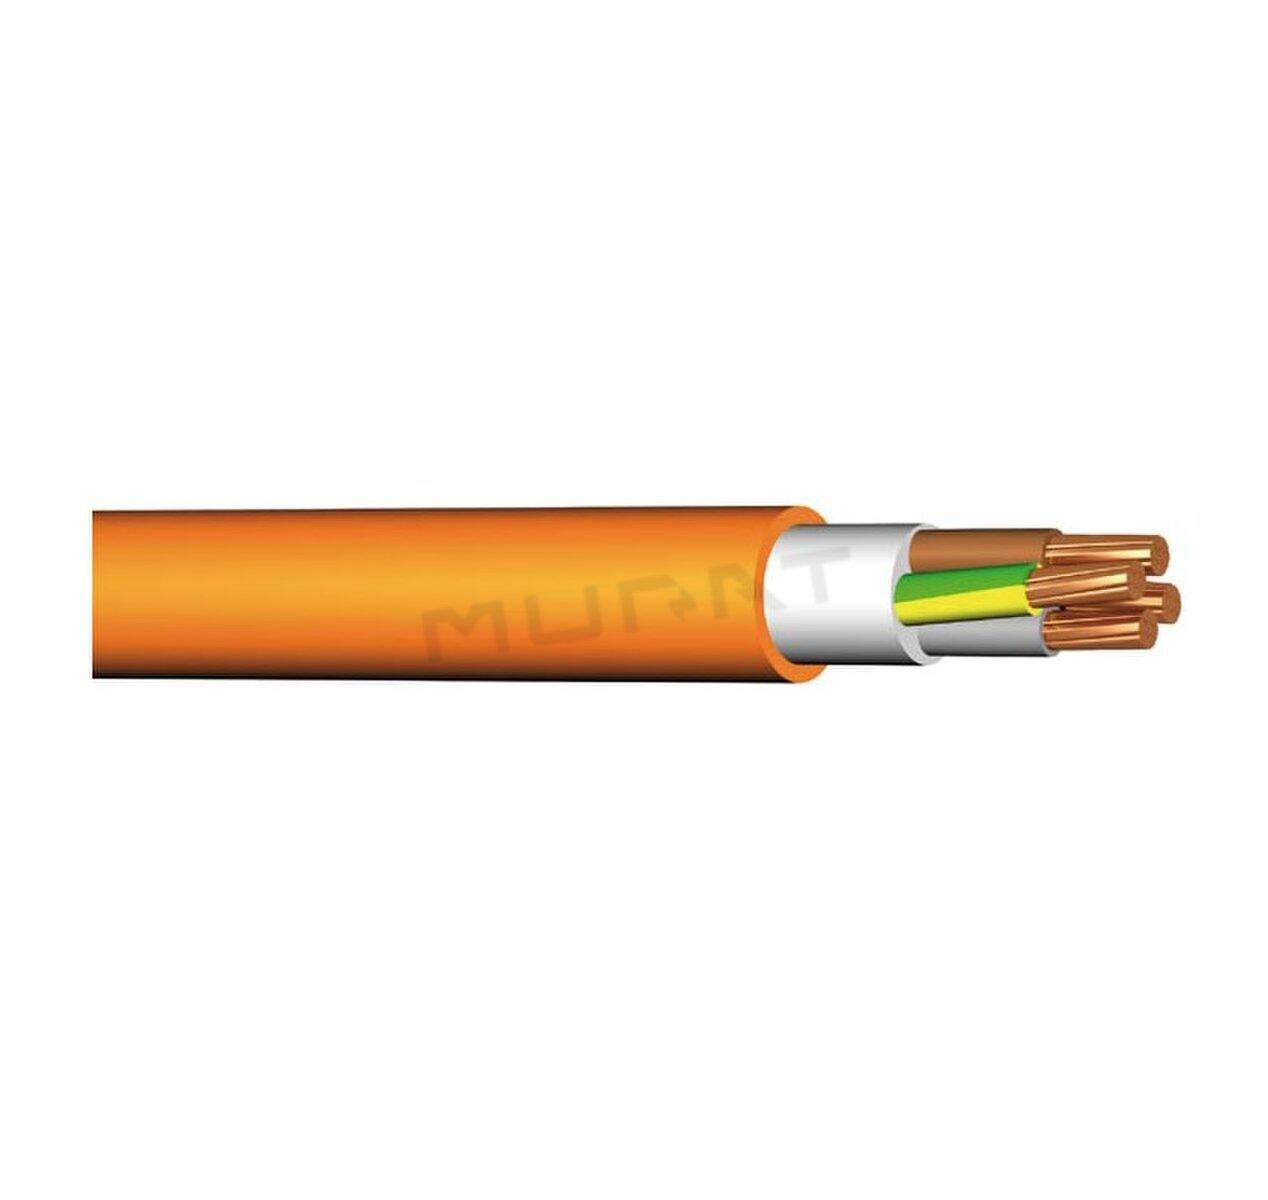 Kábel PRAFlaSafe X-J 1x150 mm2 RM B2ca s1d1a1